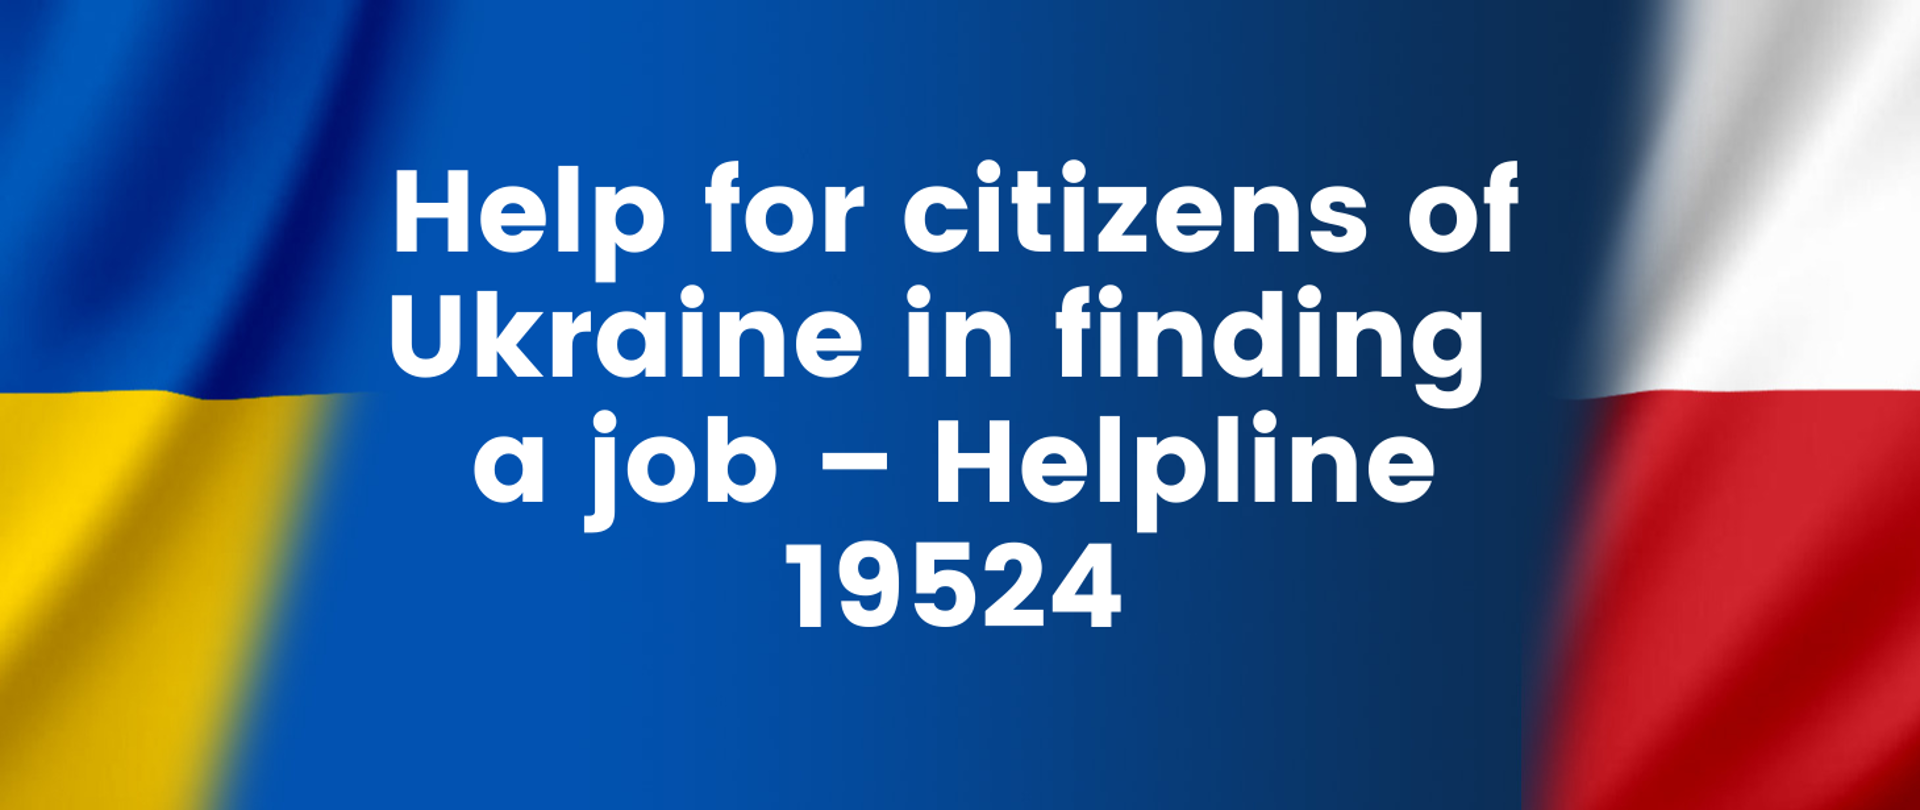 Help for citizens of Ukraine in finding a job – Helpline 19524